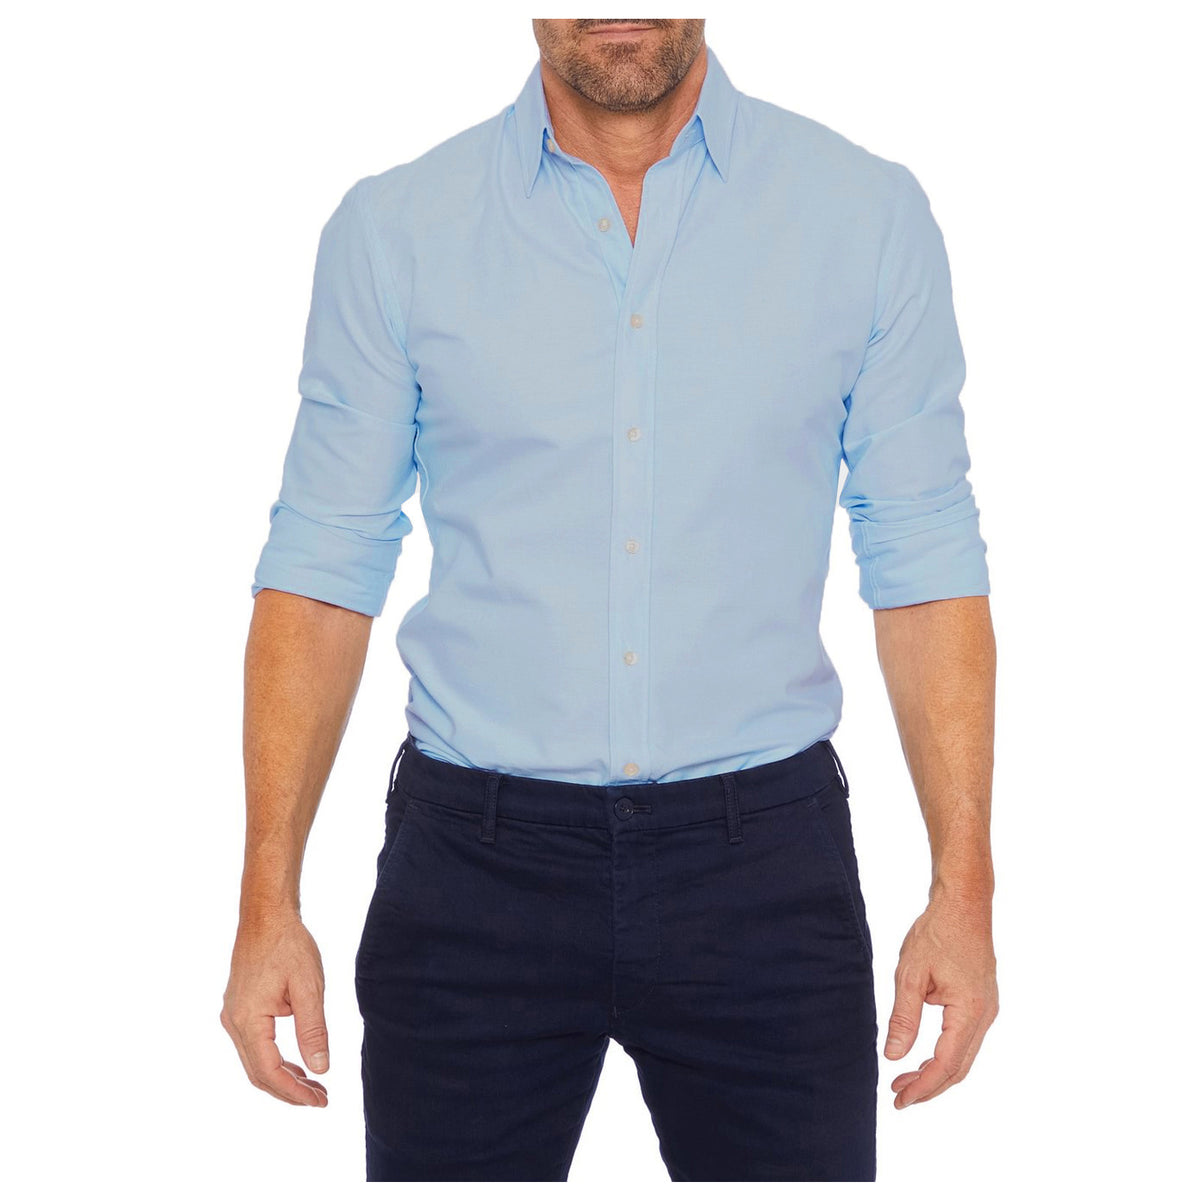 Stretchy Men's Shirt Zip Shirt